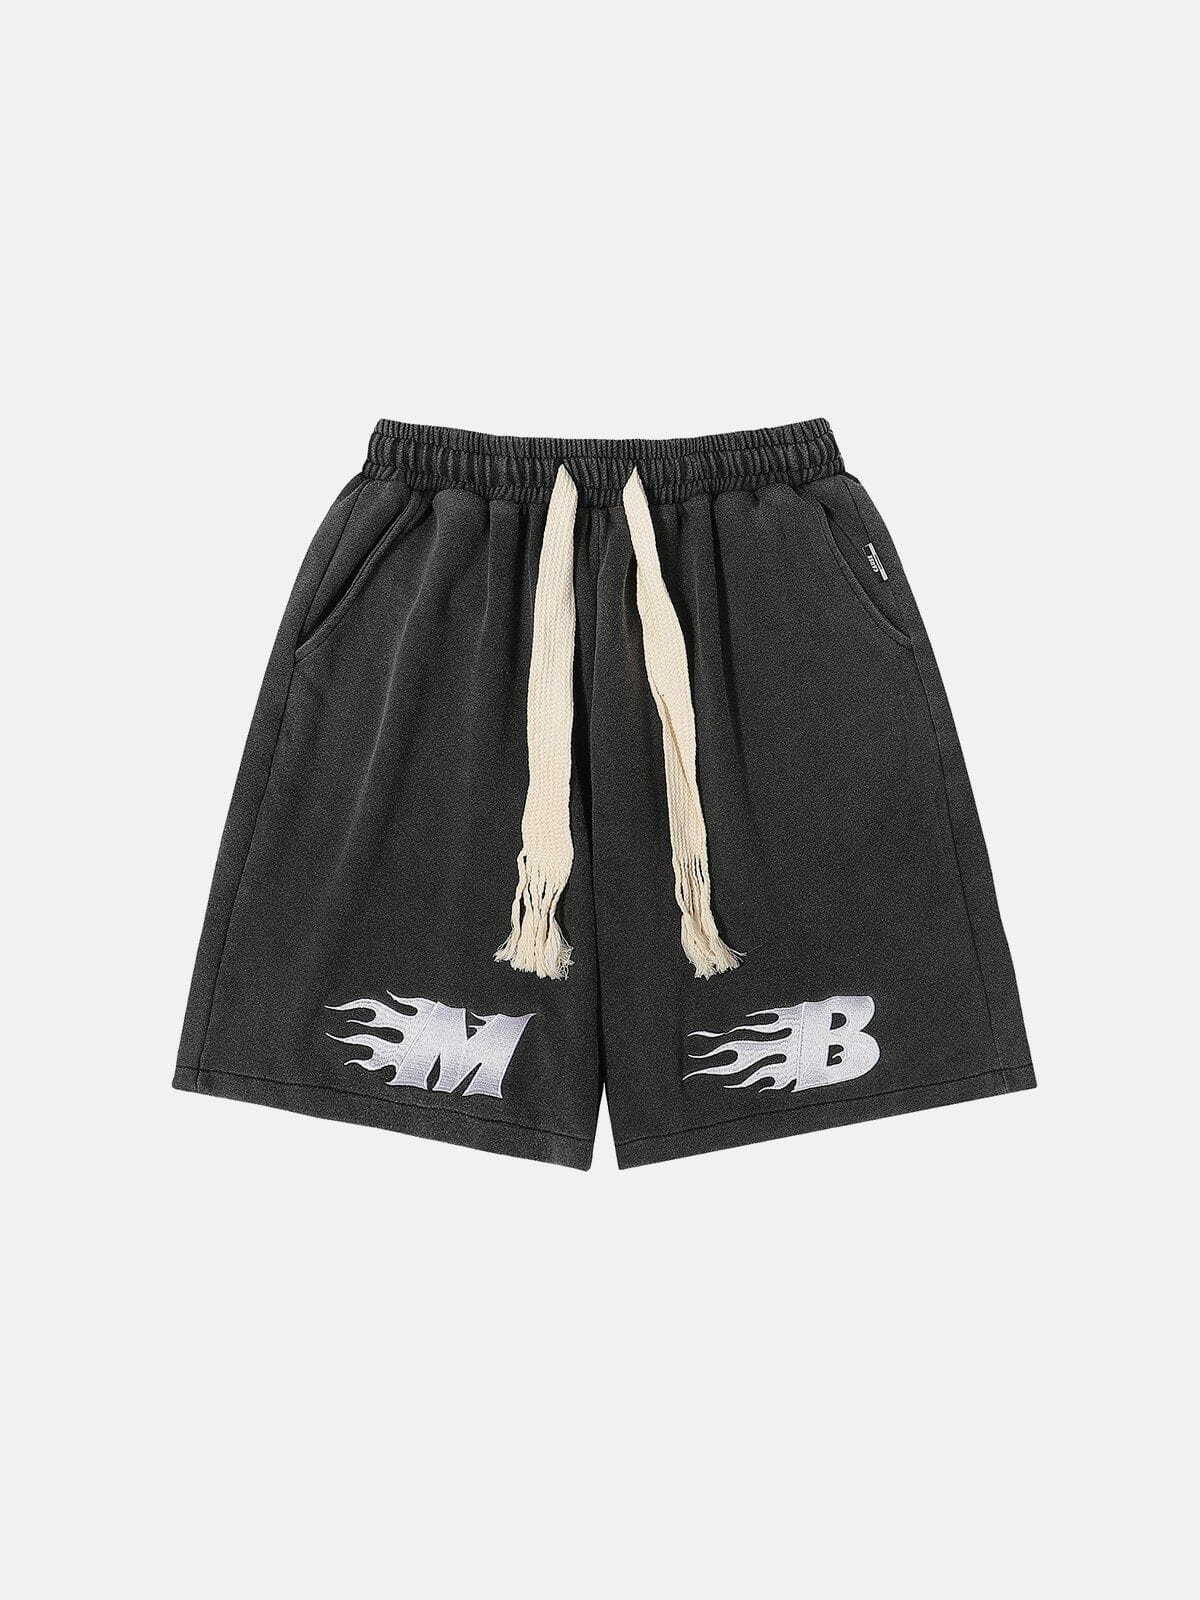 flame print drawstring shorts edgy y2k streetwear 4580